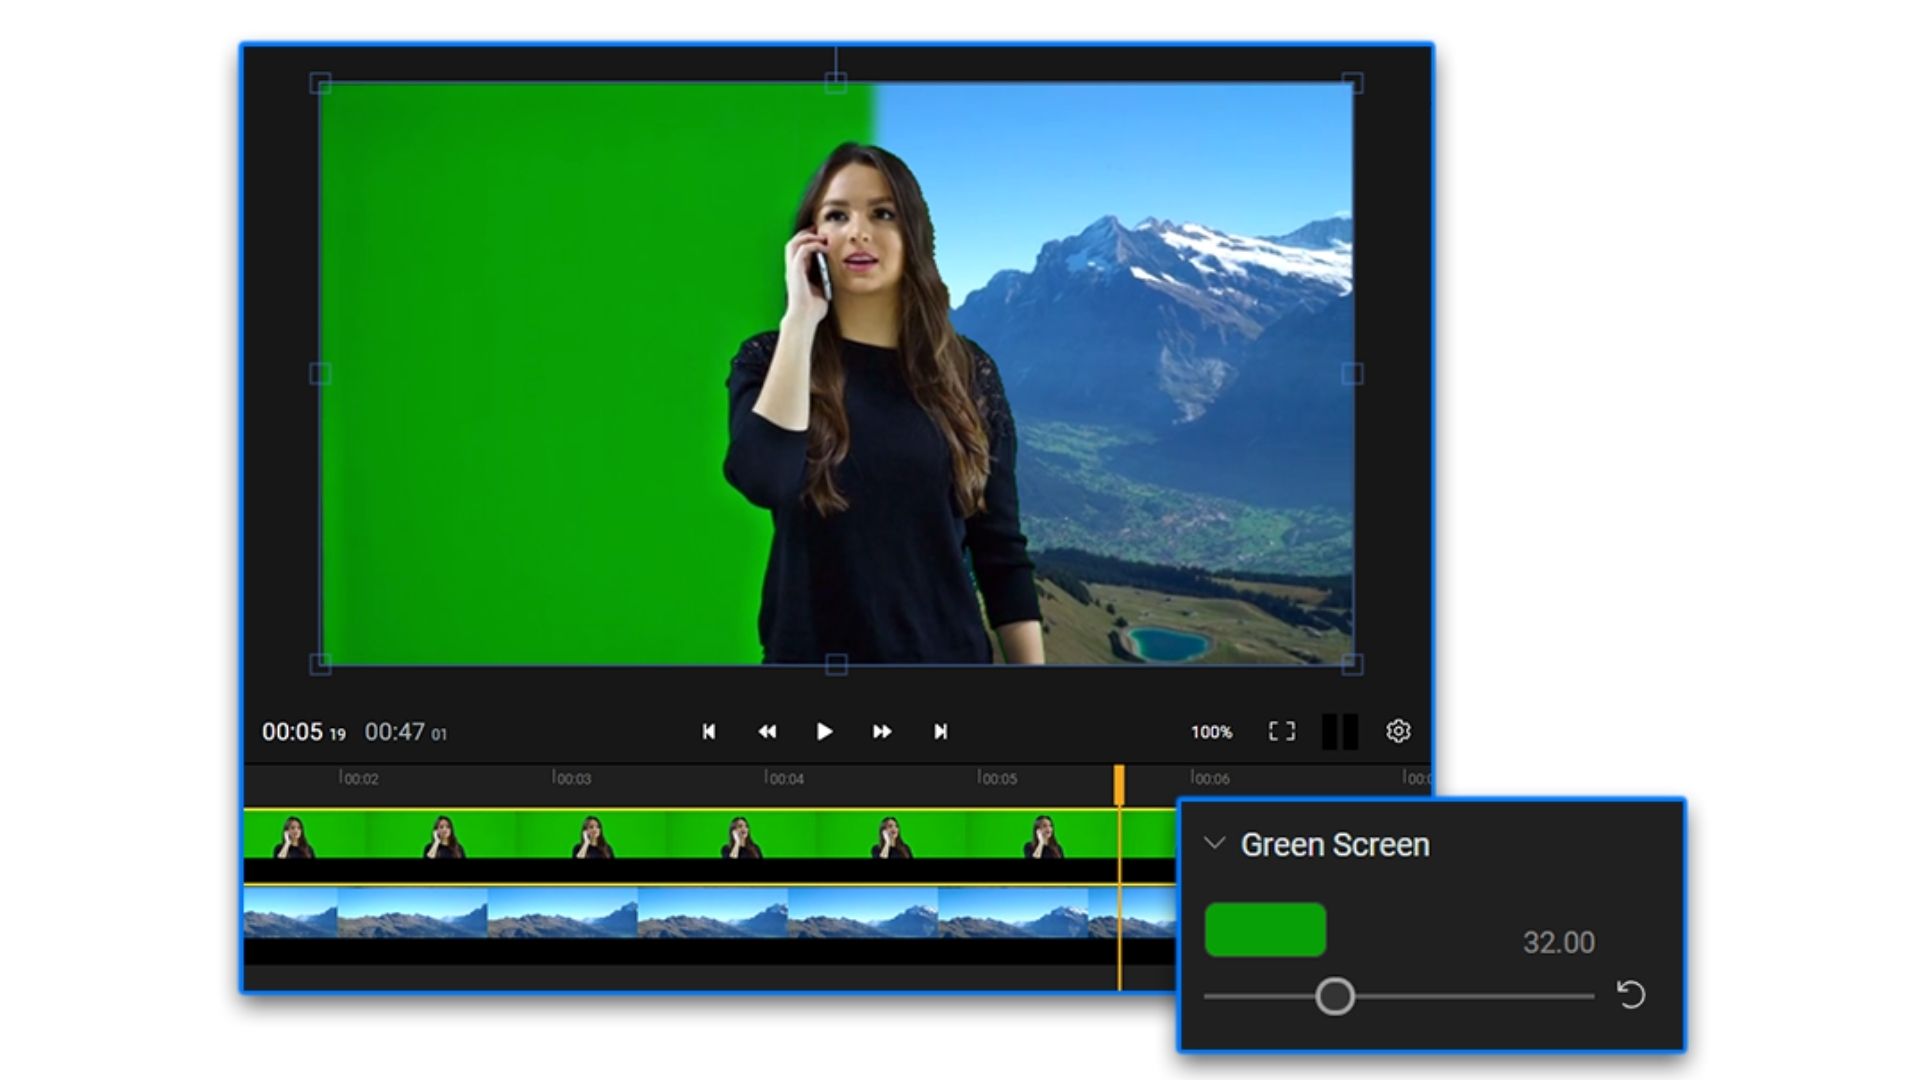 Green-screen editing